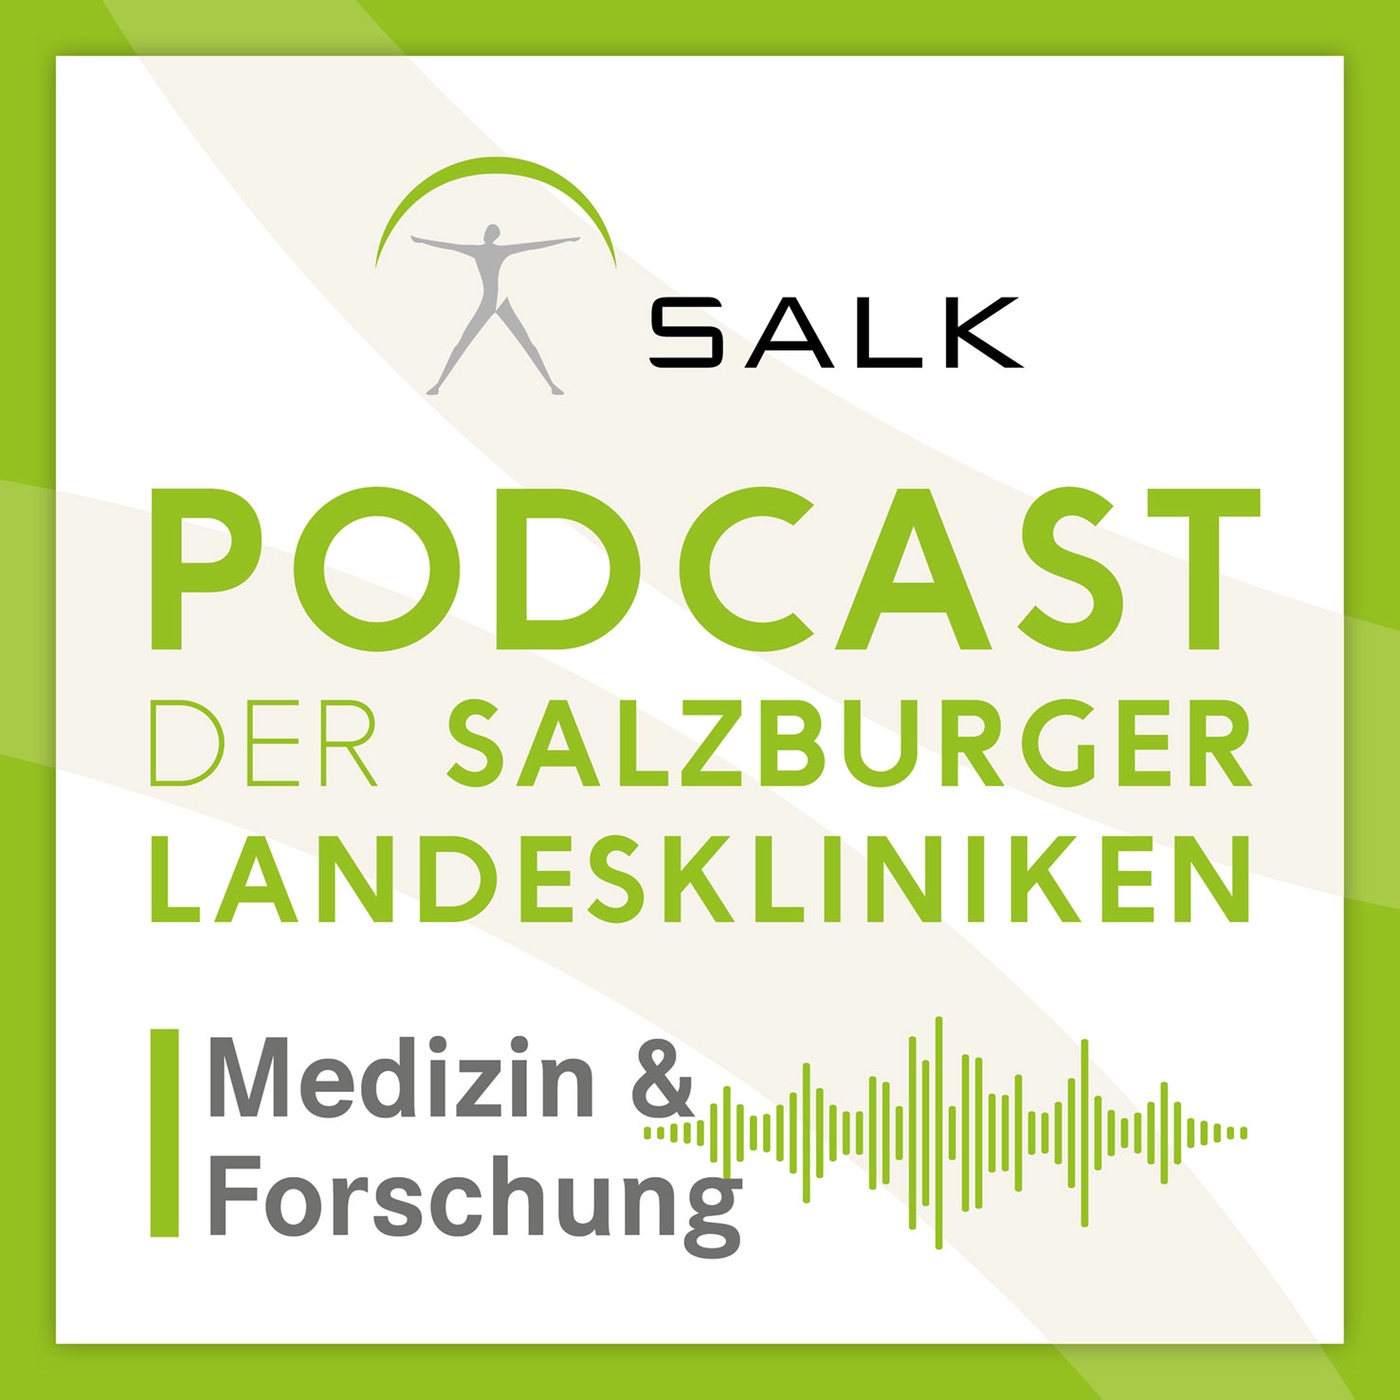 Podcast der Salzburger Landeskliniken: Medizin & Forschung